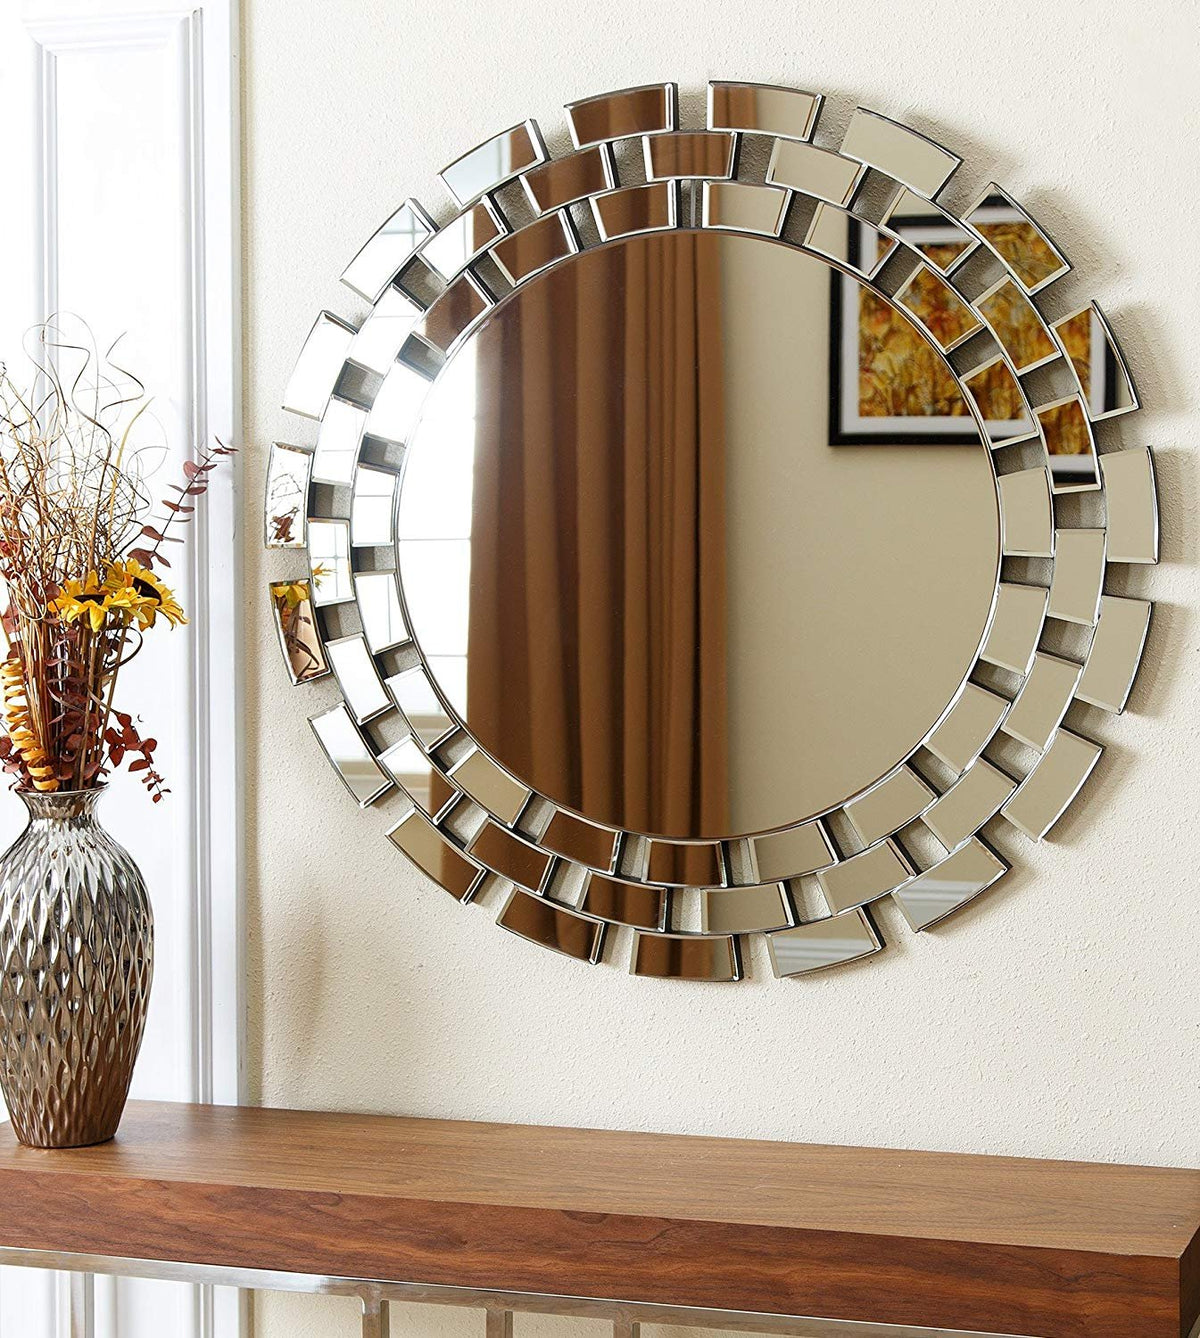 Elegant Wall Mount Round Glass Mirror for Home Decor